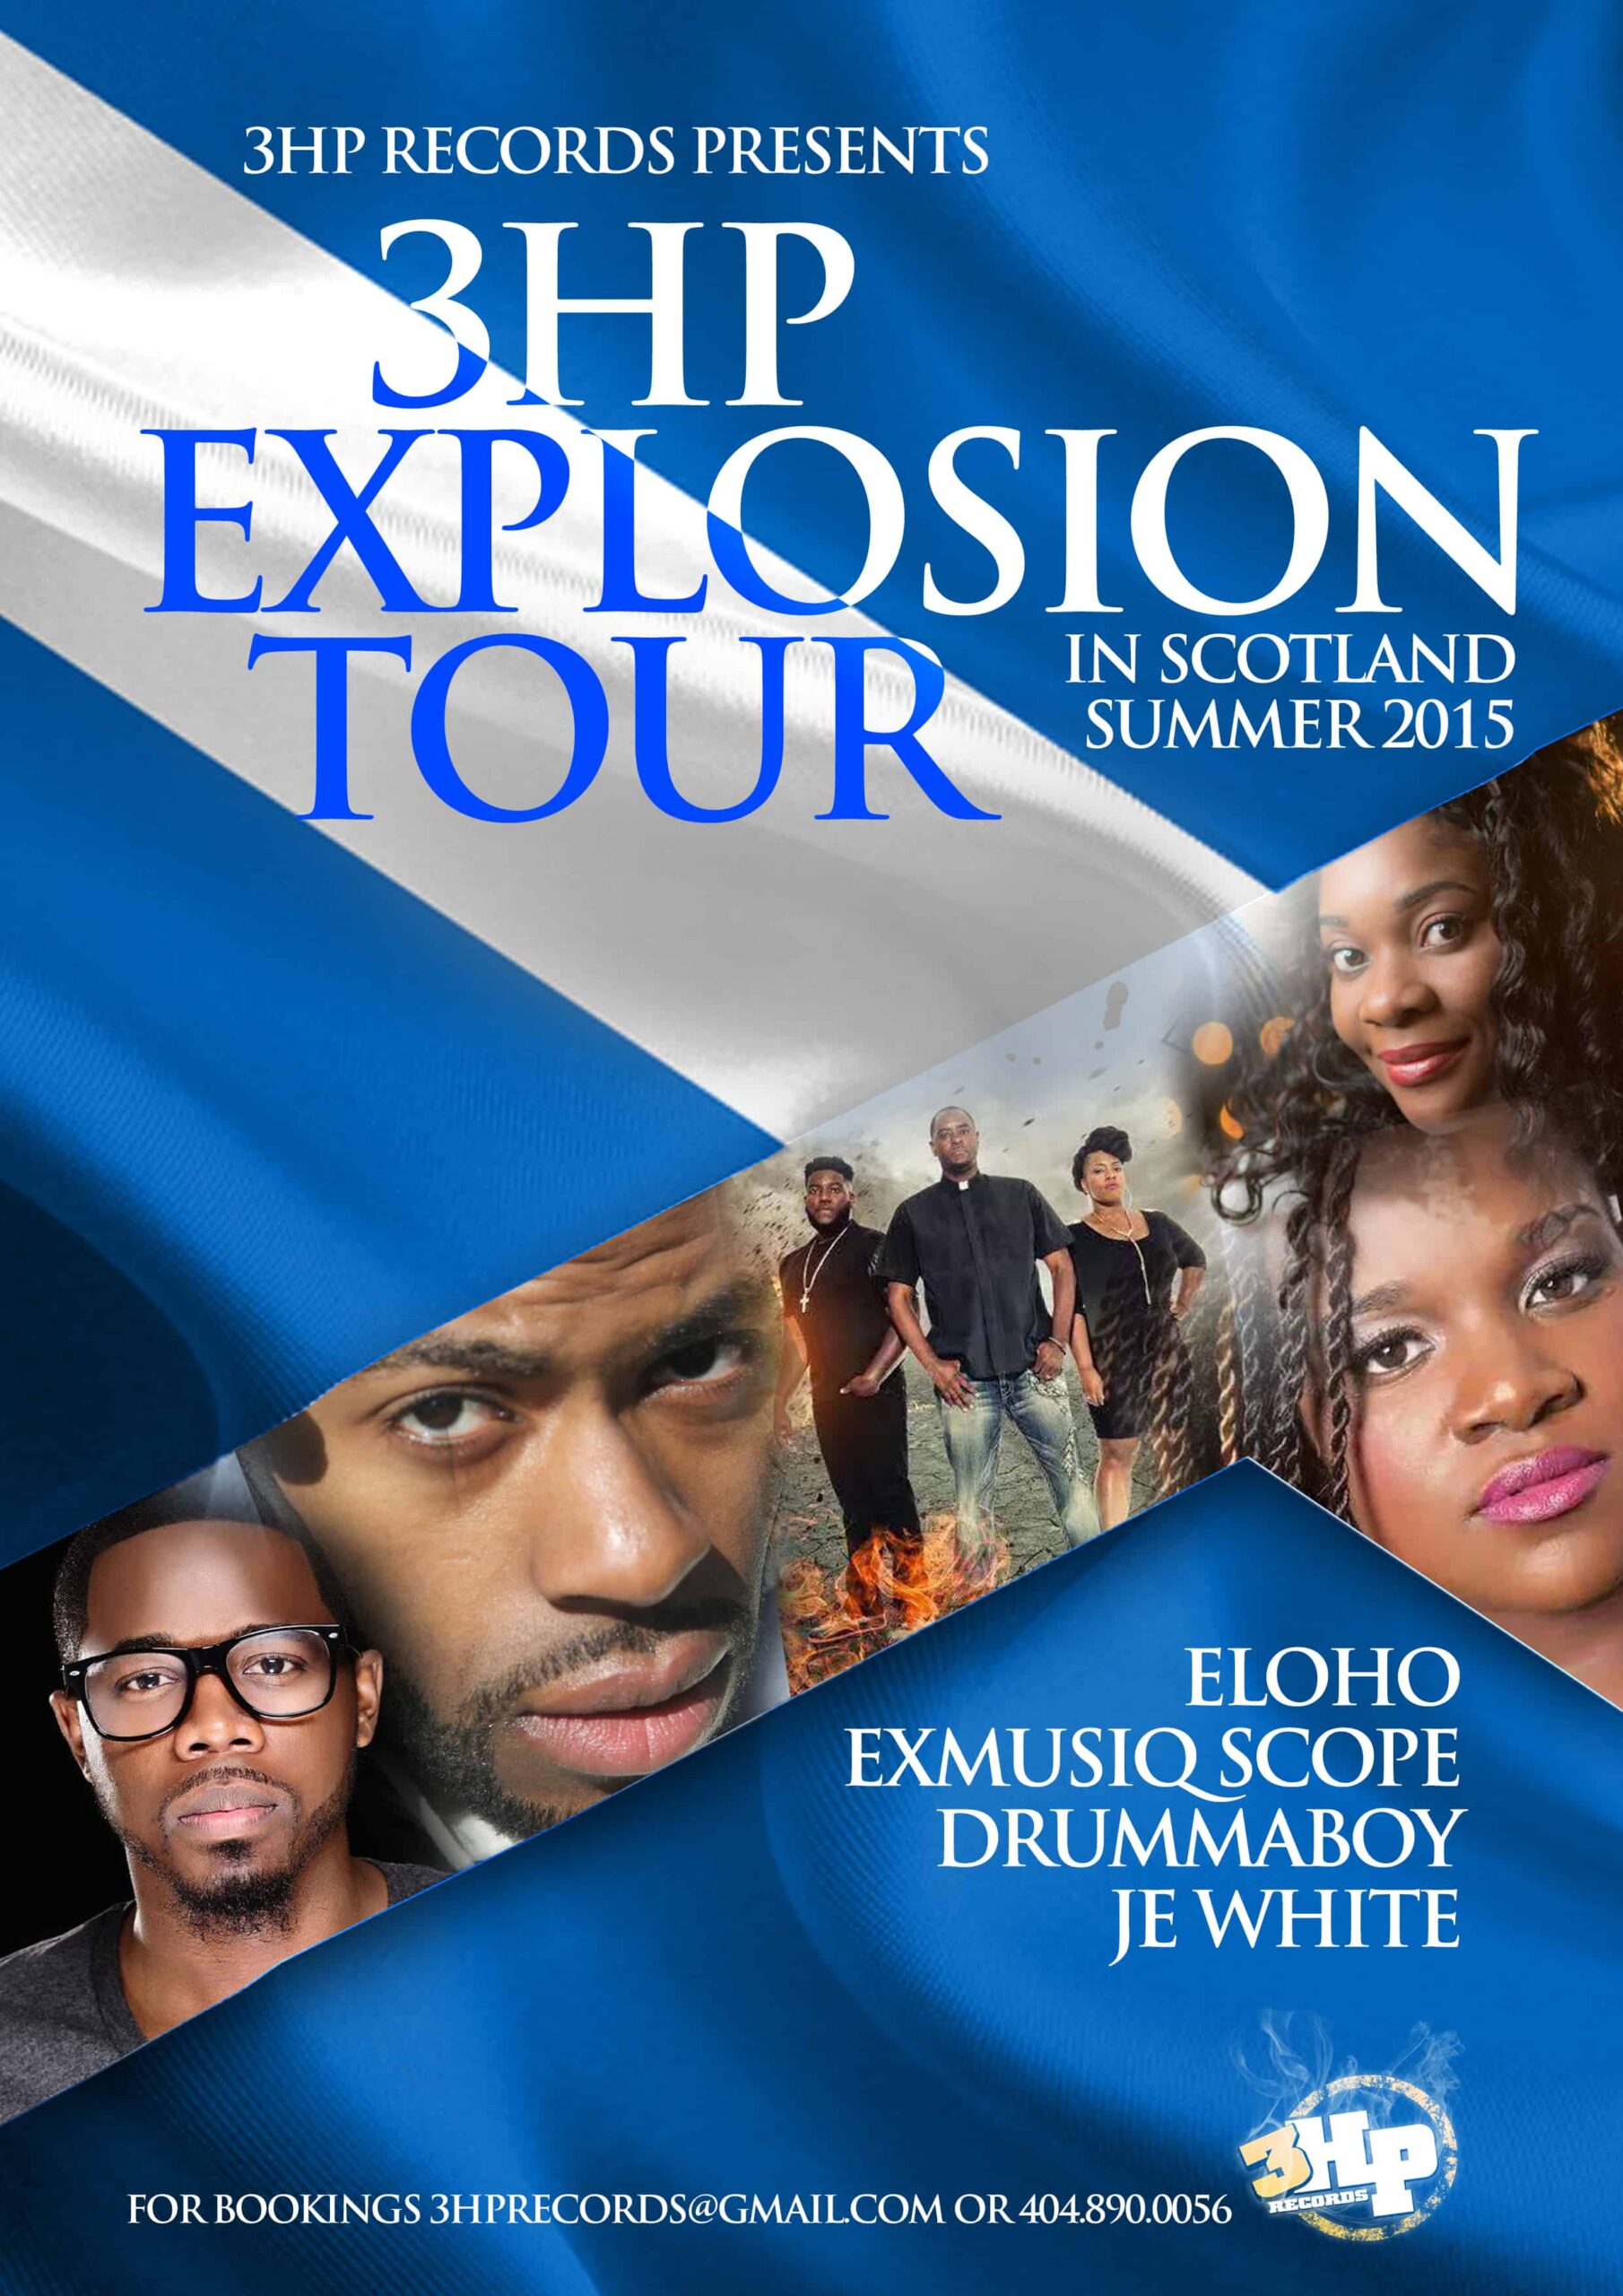 3hp-explosion-tour-scotland